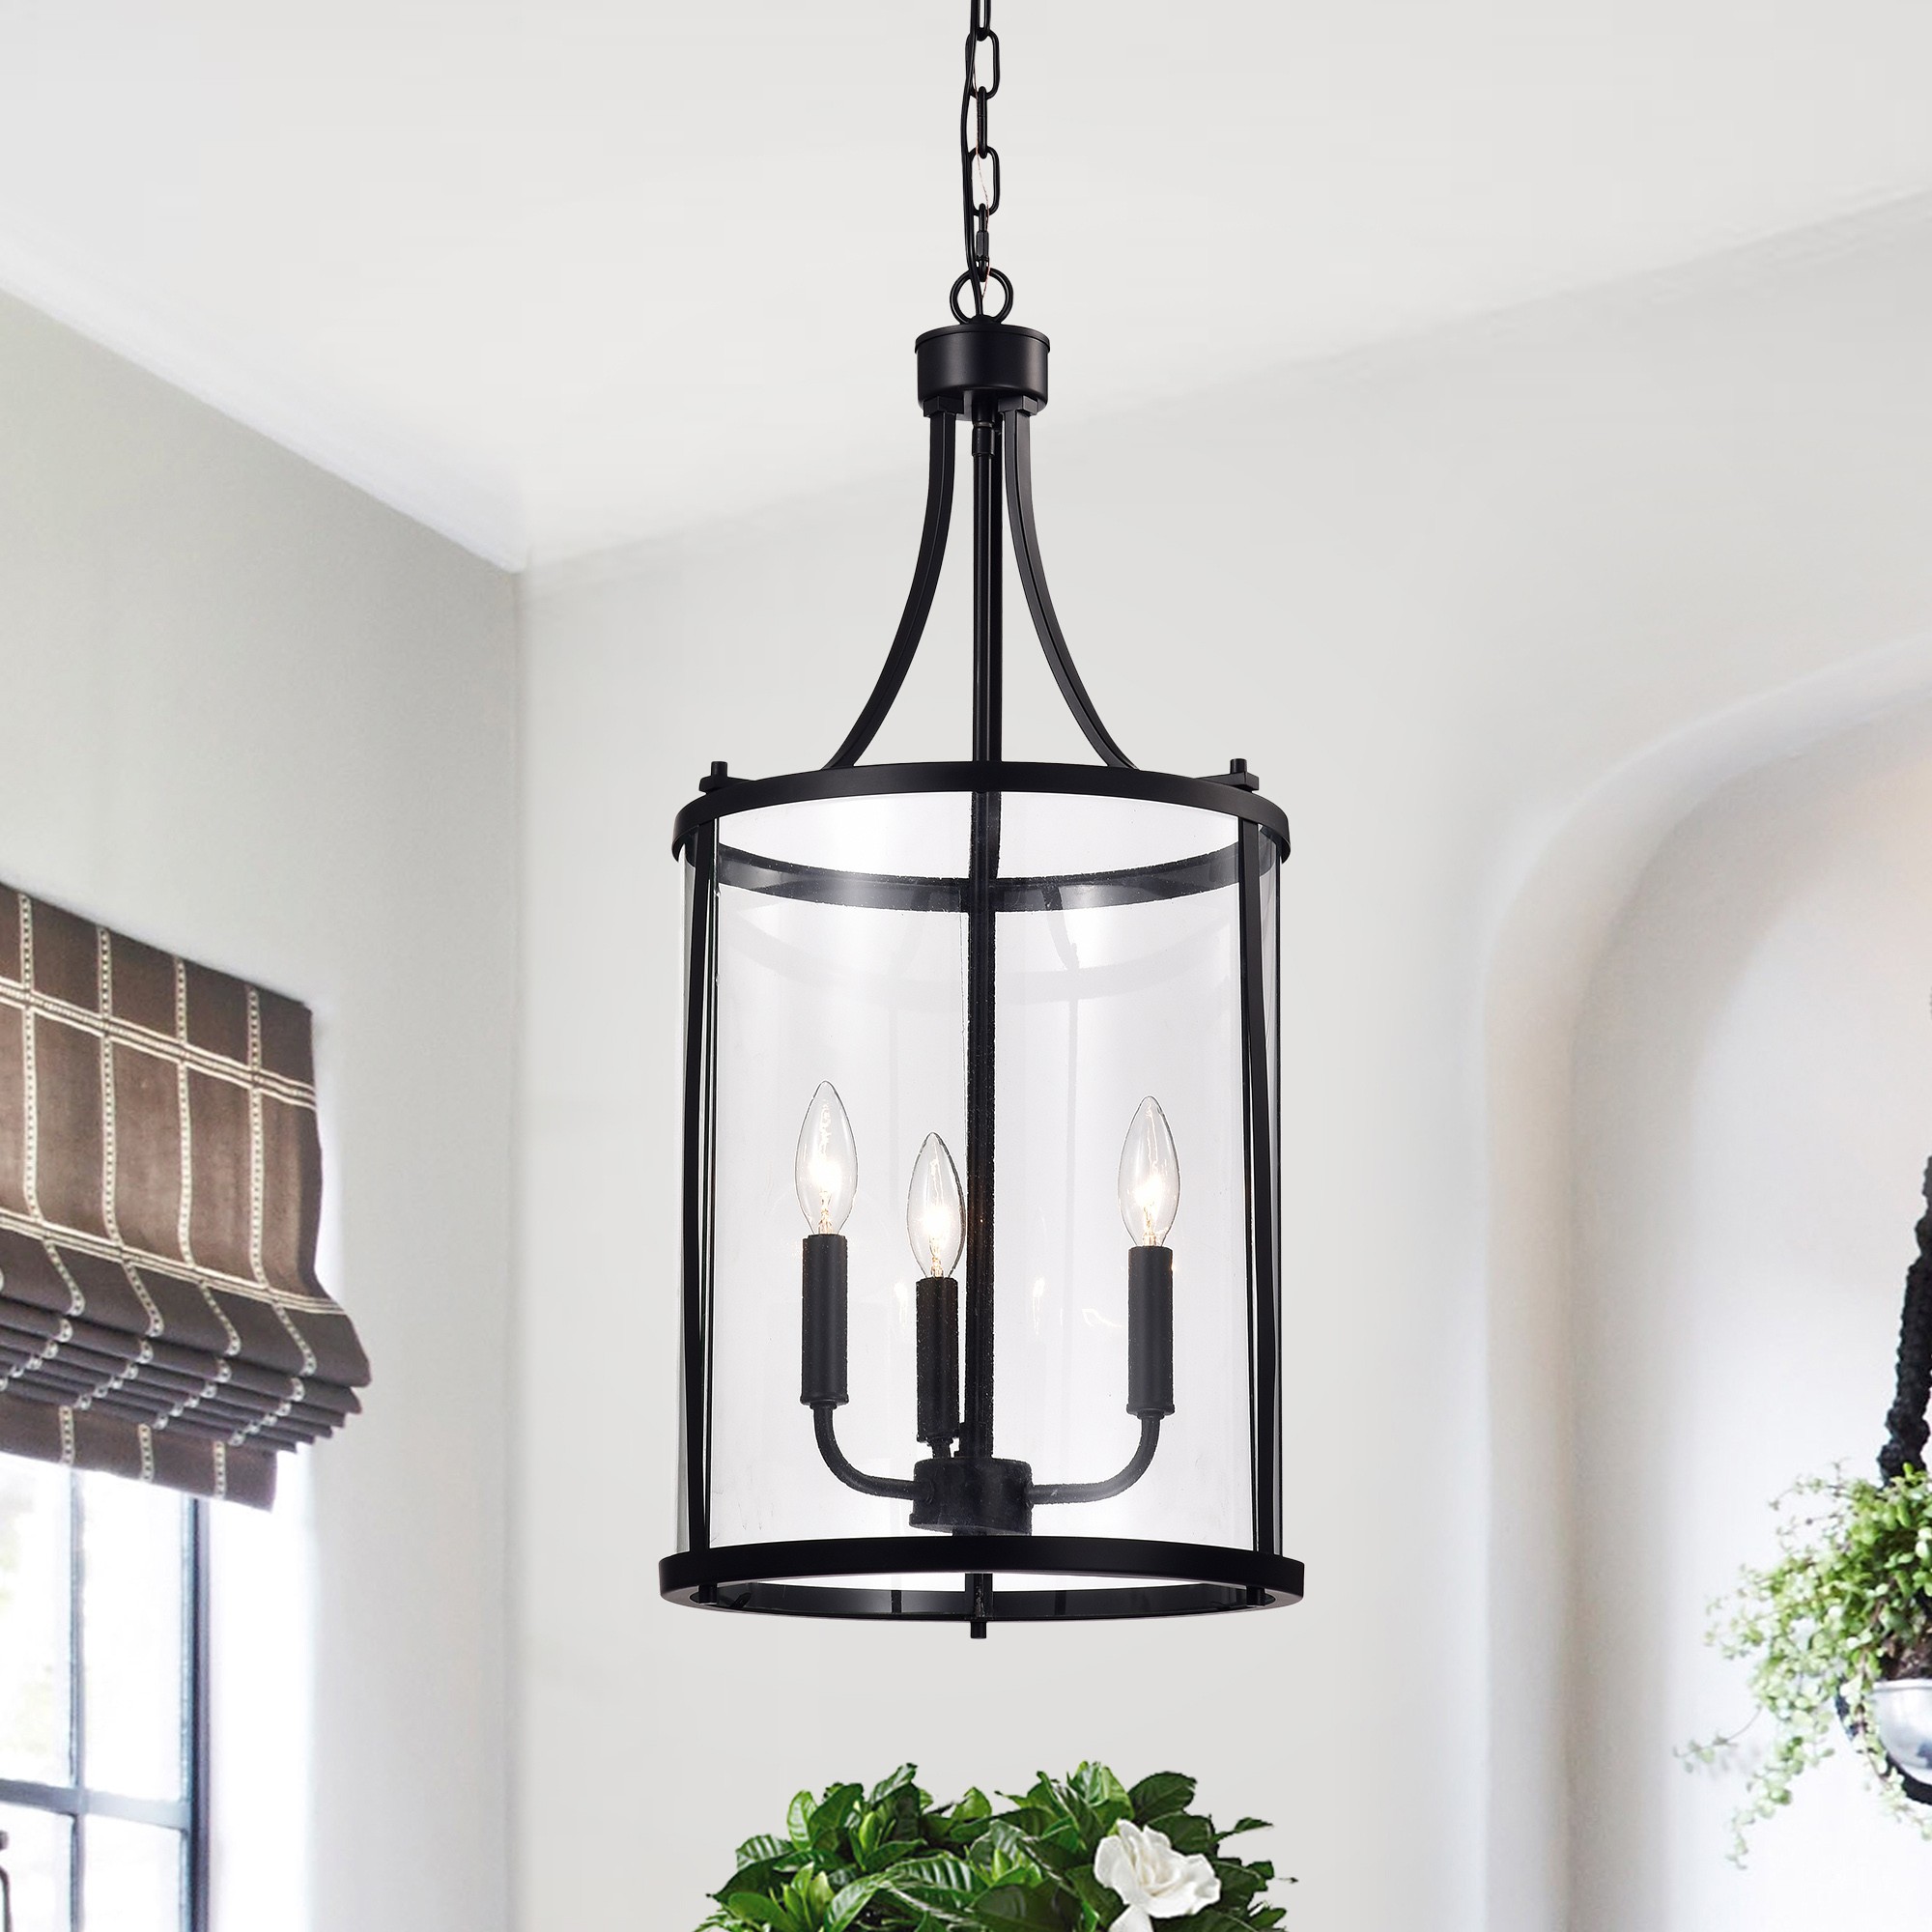 Indoor Black Finish Pendant Lamp with Light Kit